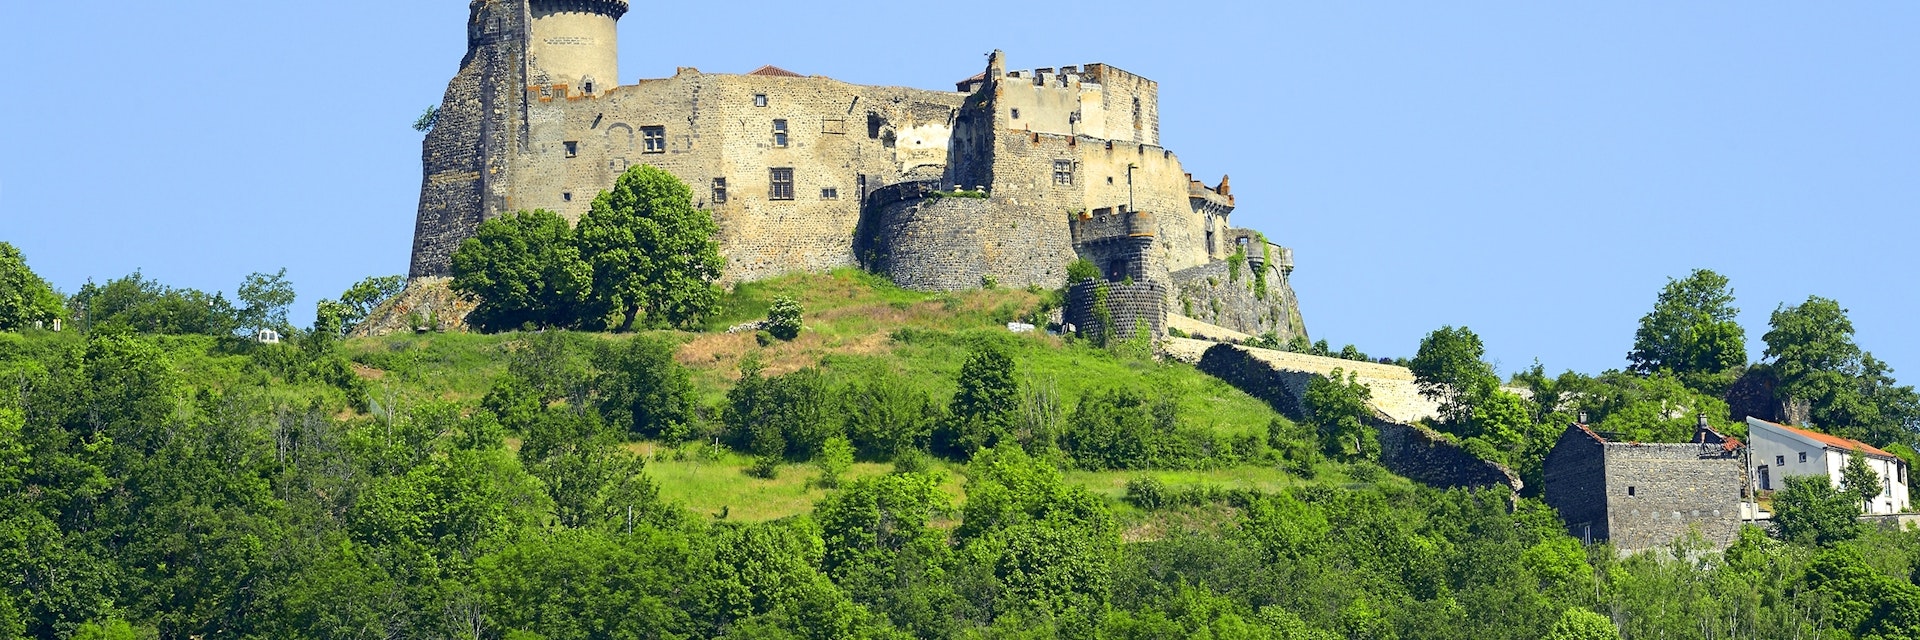 The medieval castle of Tournoel.